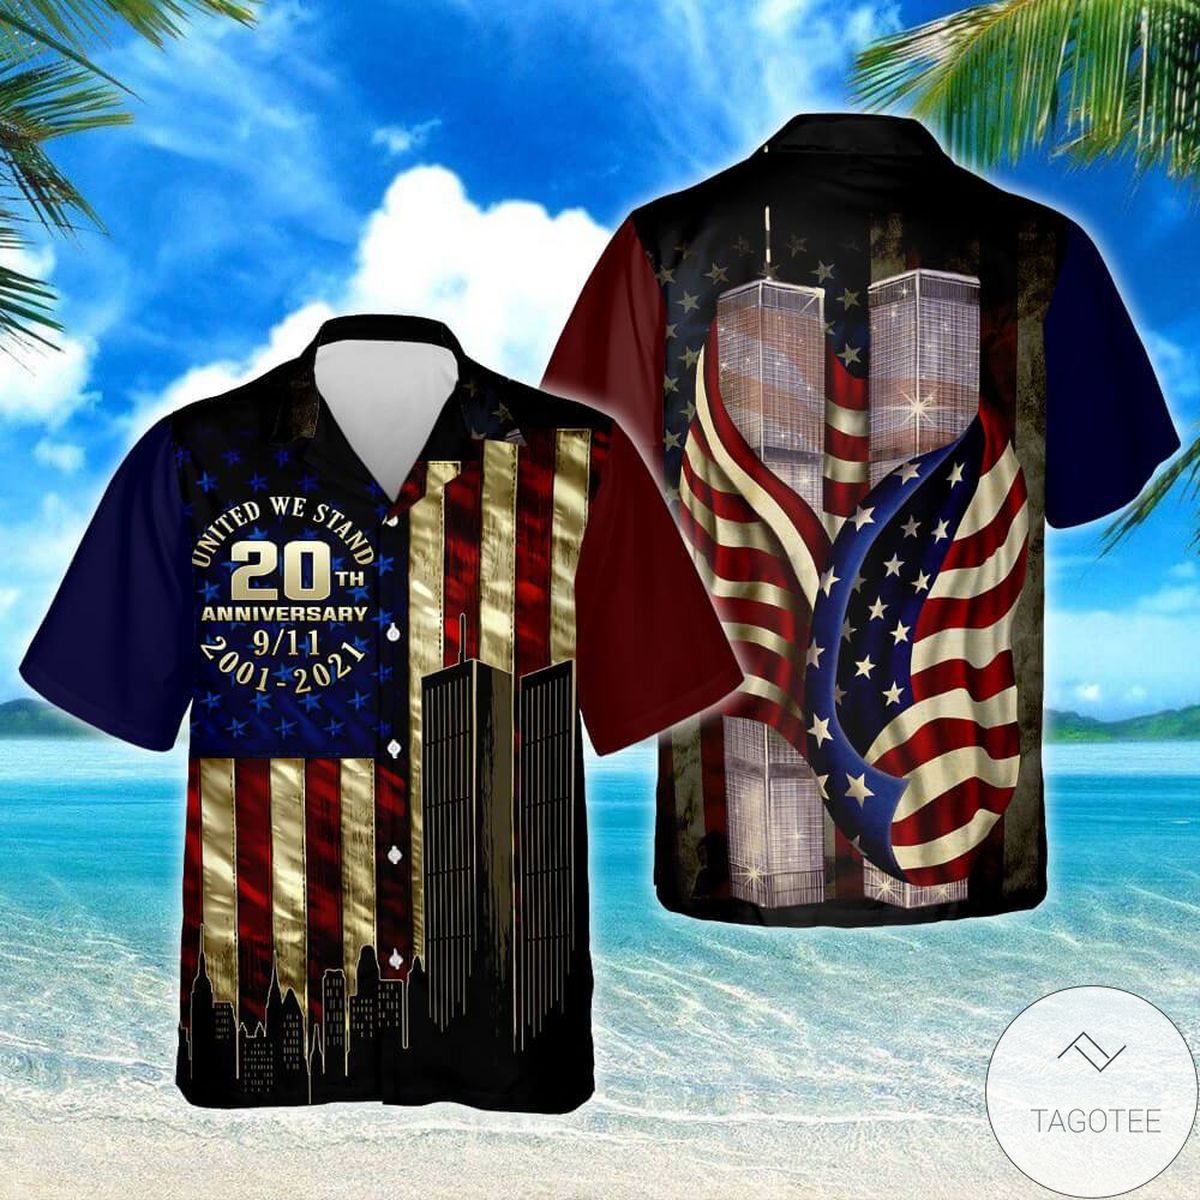 United We Stand 20th Anniversary 9/11 2001-2021 Never Forget 911 Hawaiian Shirt